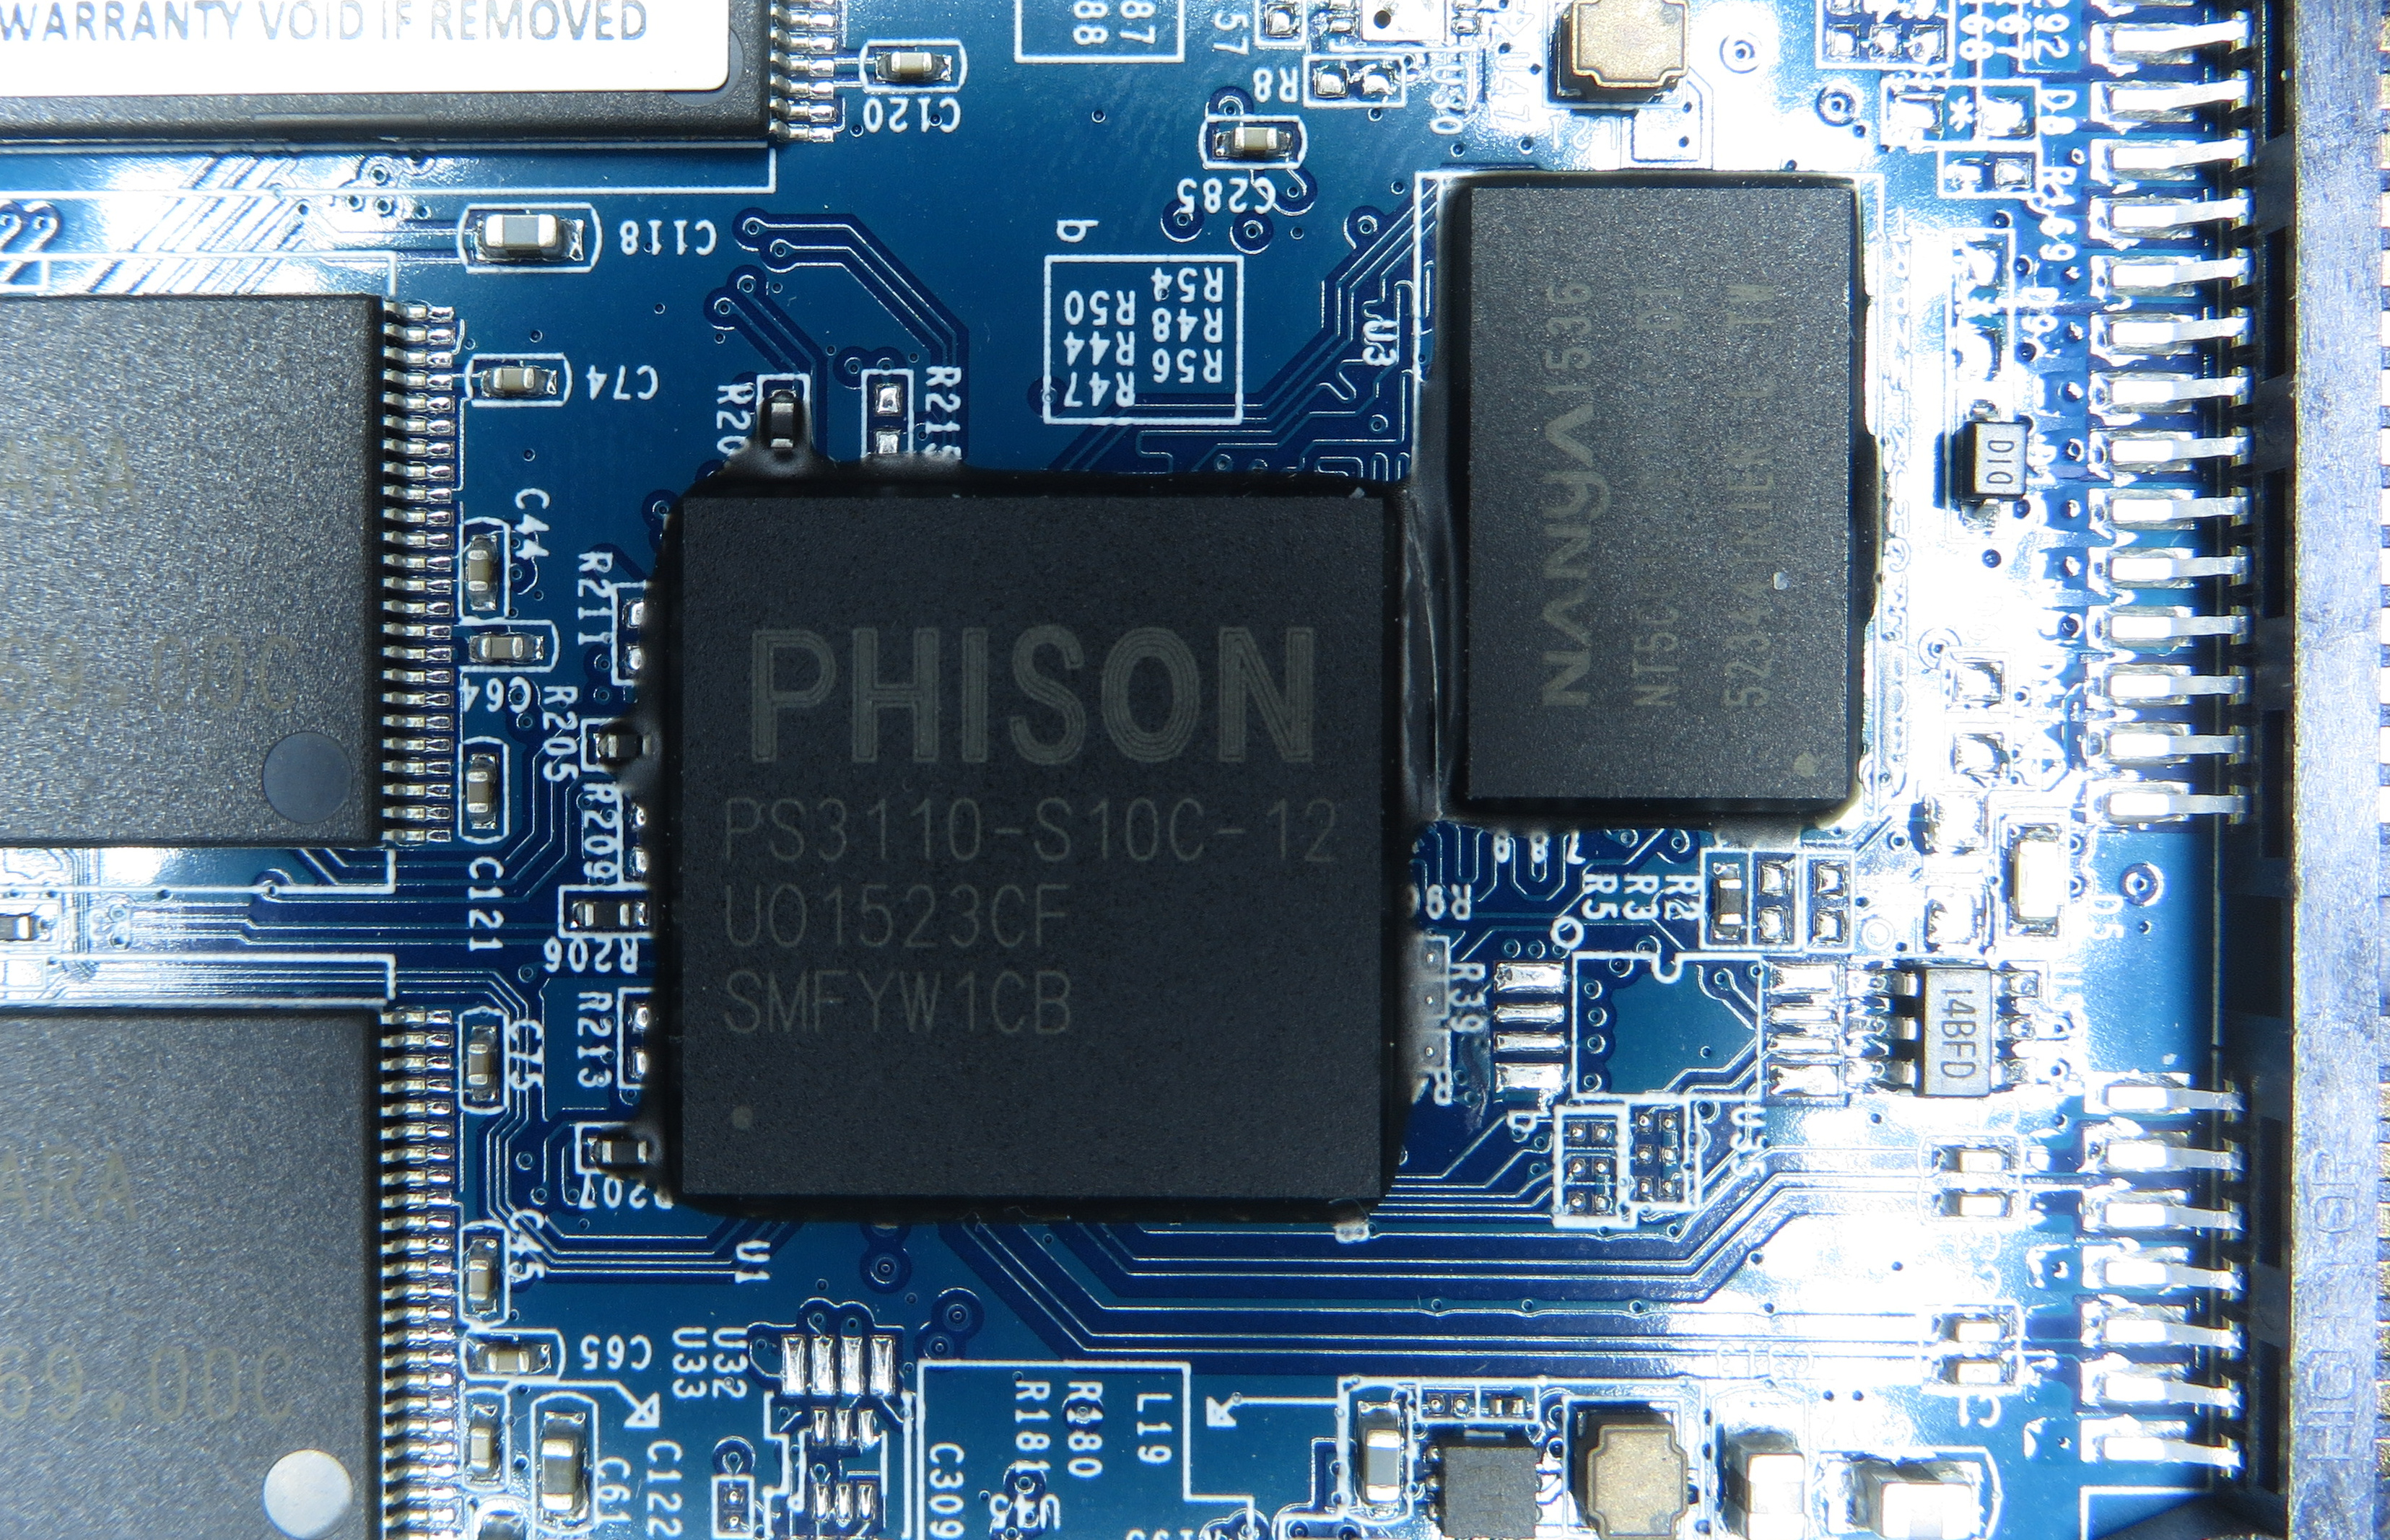 PNY CS1311 SSD Review (120GB/480GB)